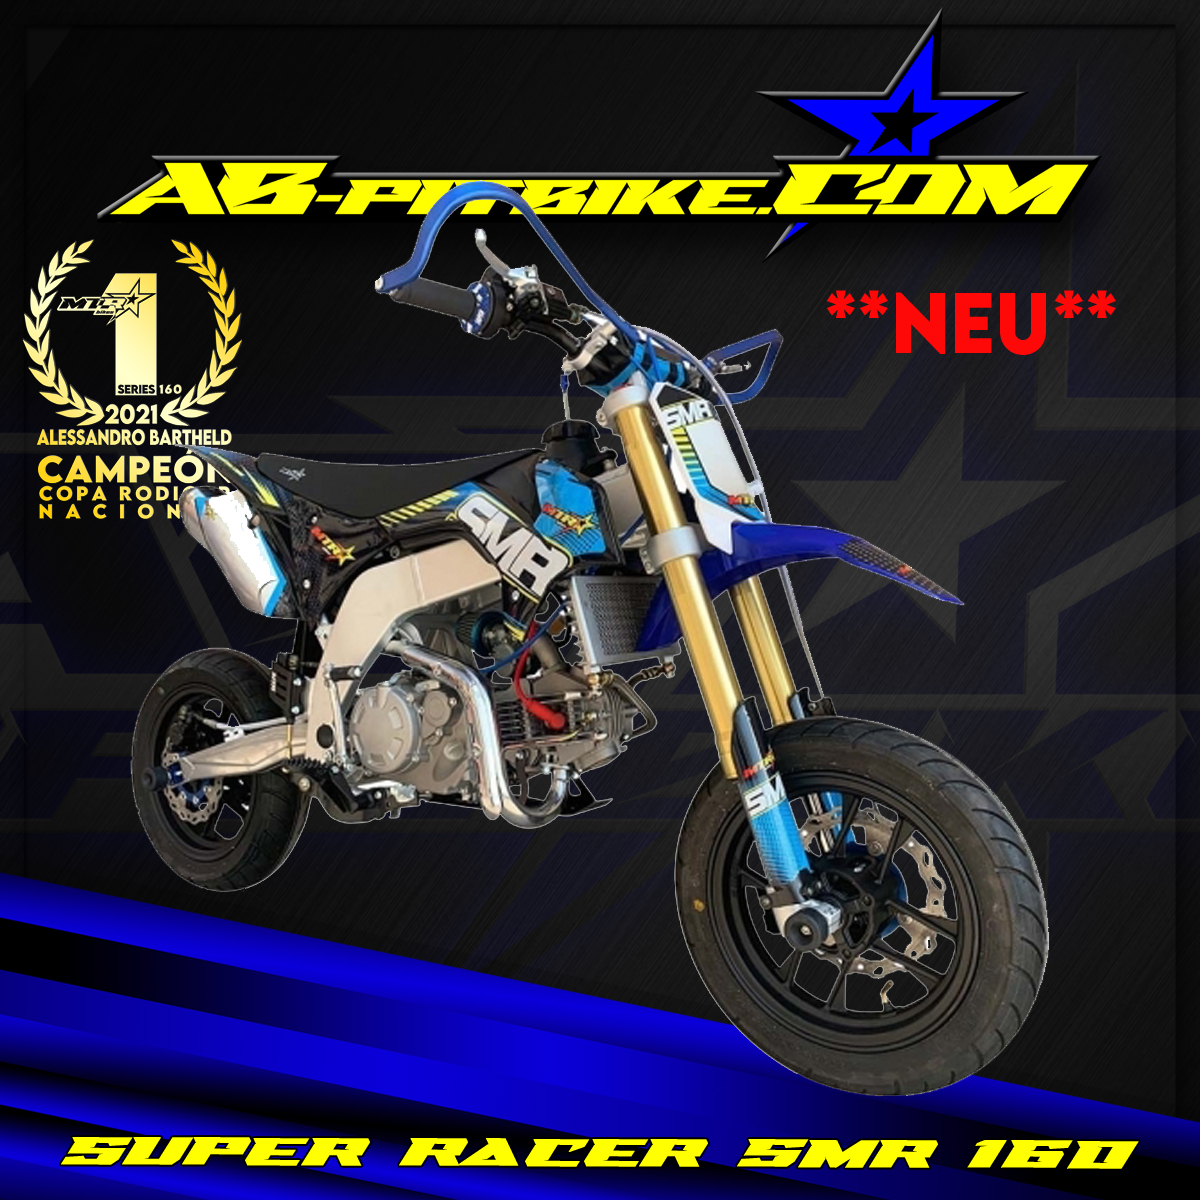 Ölkühler Pitbike – supermoto4fun-shop